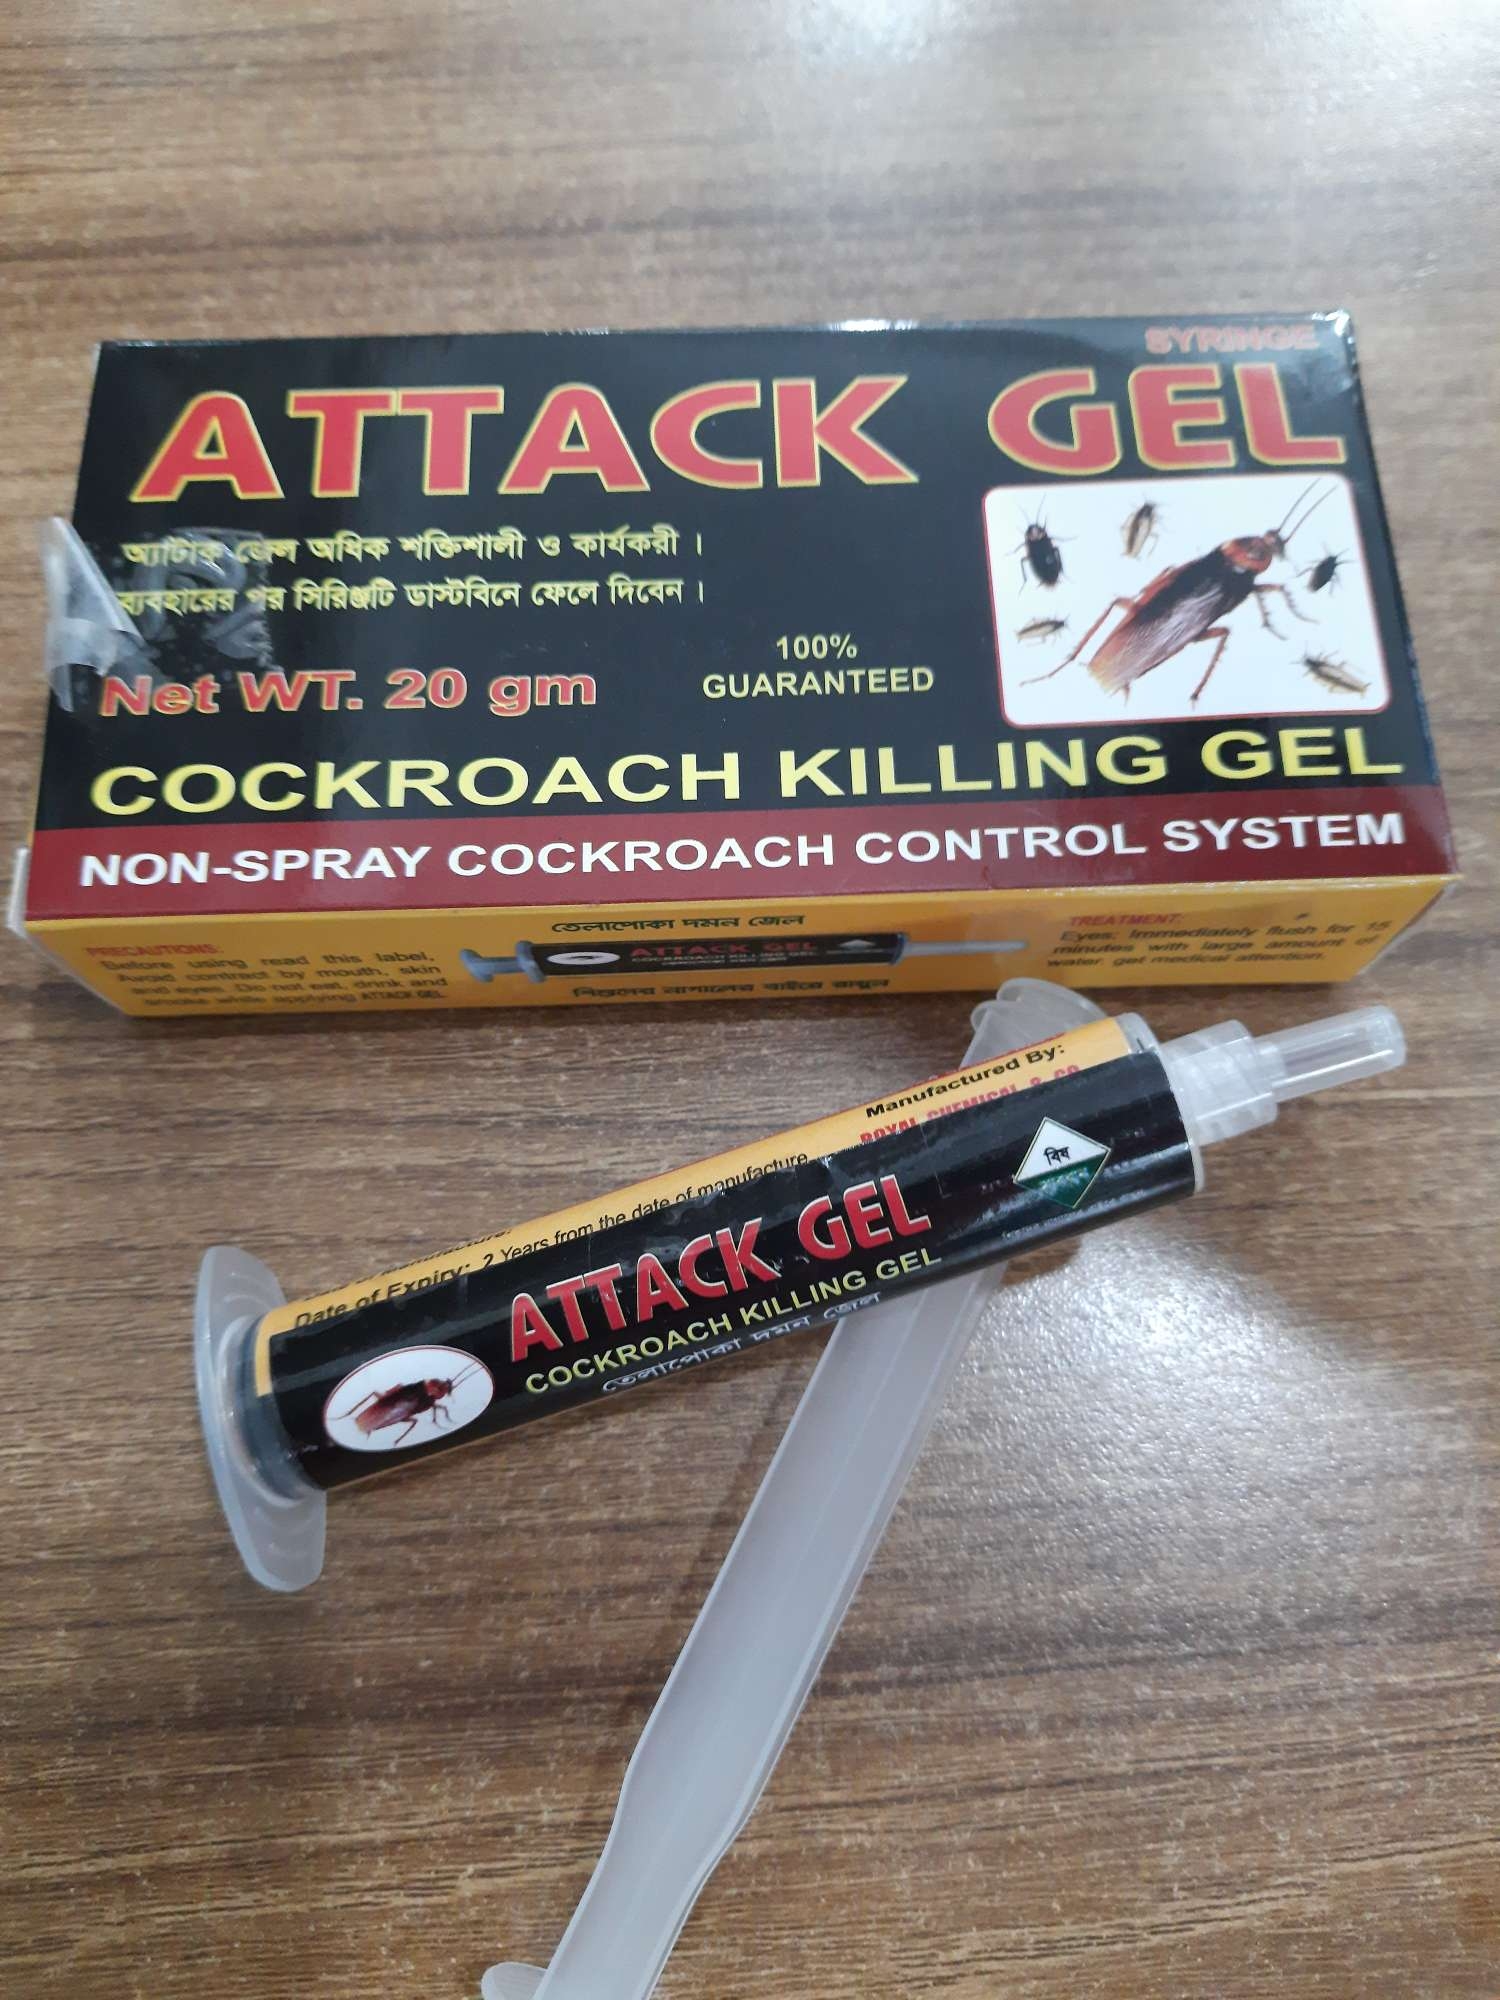 Cockroach Killer Attack Gell -20 gm